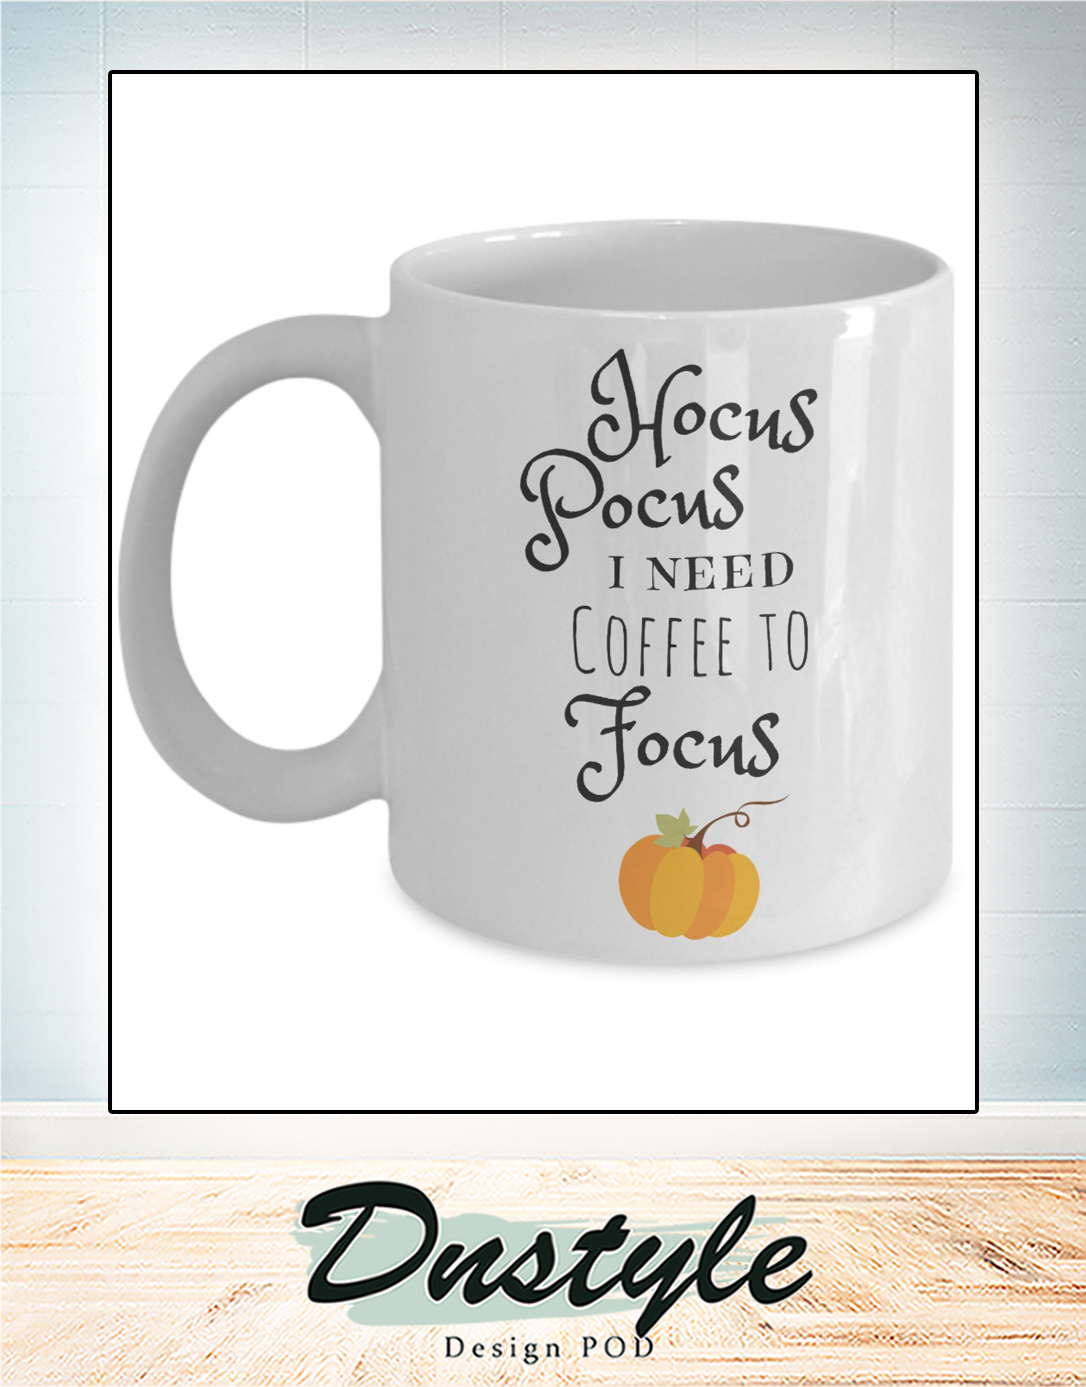 Hocus pocus I need coffee to focus mug